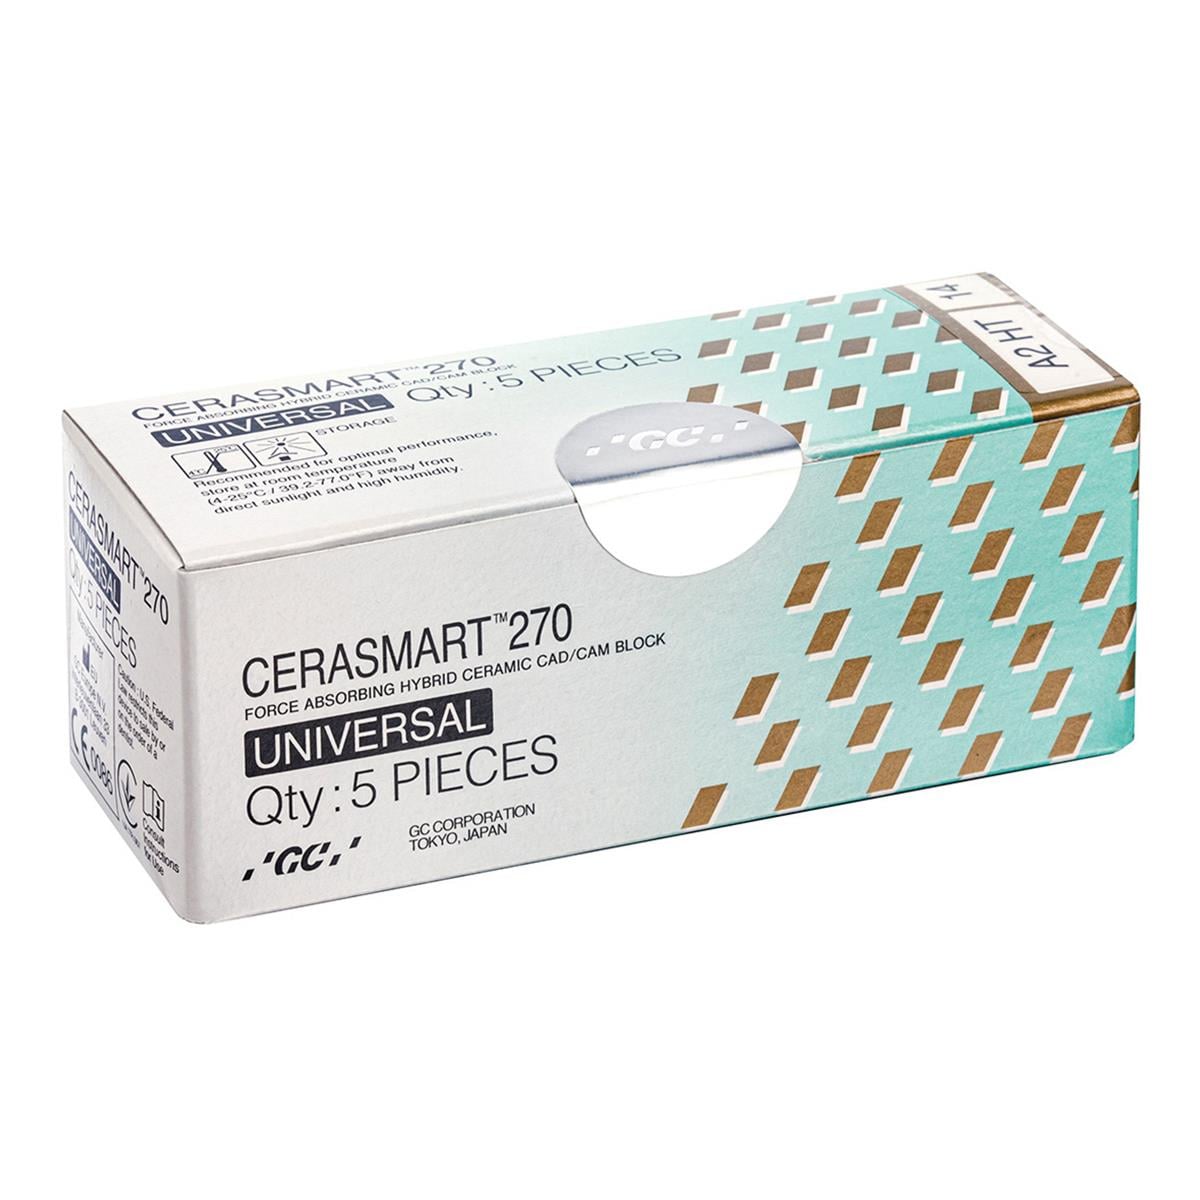 CERASMART 270 Block B1 (LT) Low Translucency Universal Size 12 5pk